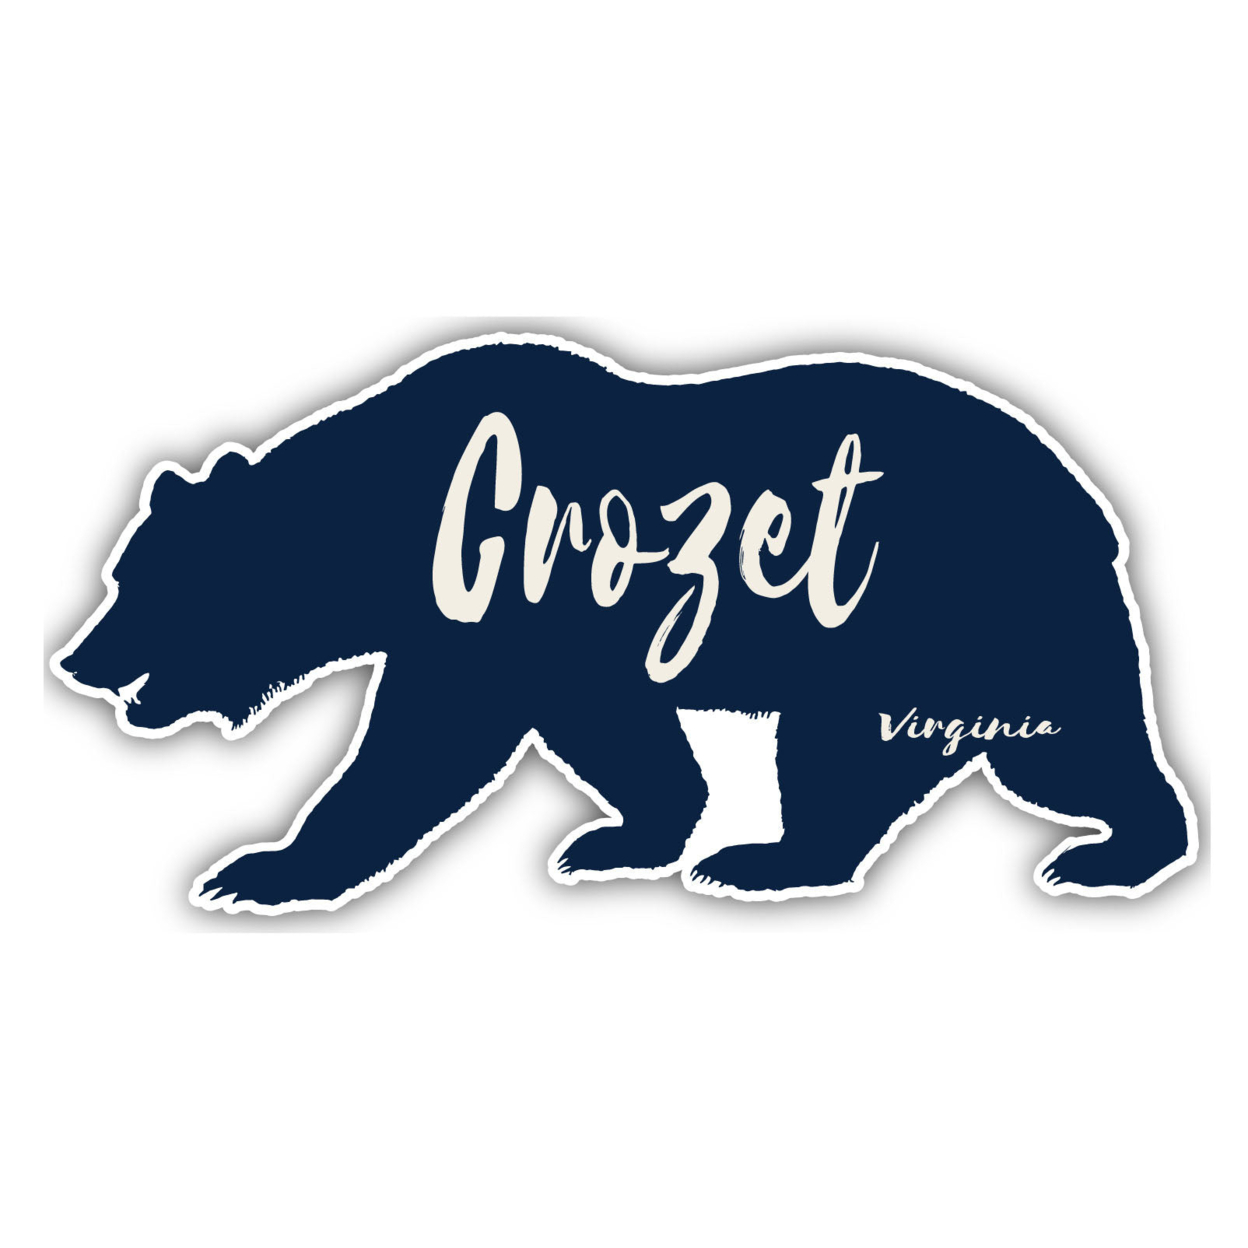 Crozet Virginia Souvenir Decorative Stickers (Choose Theme And Size) - Single Unit, 12-Inch, Bear